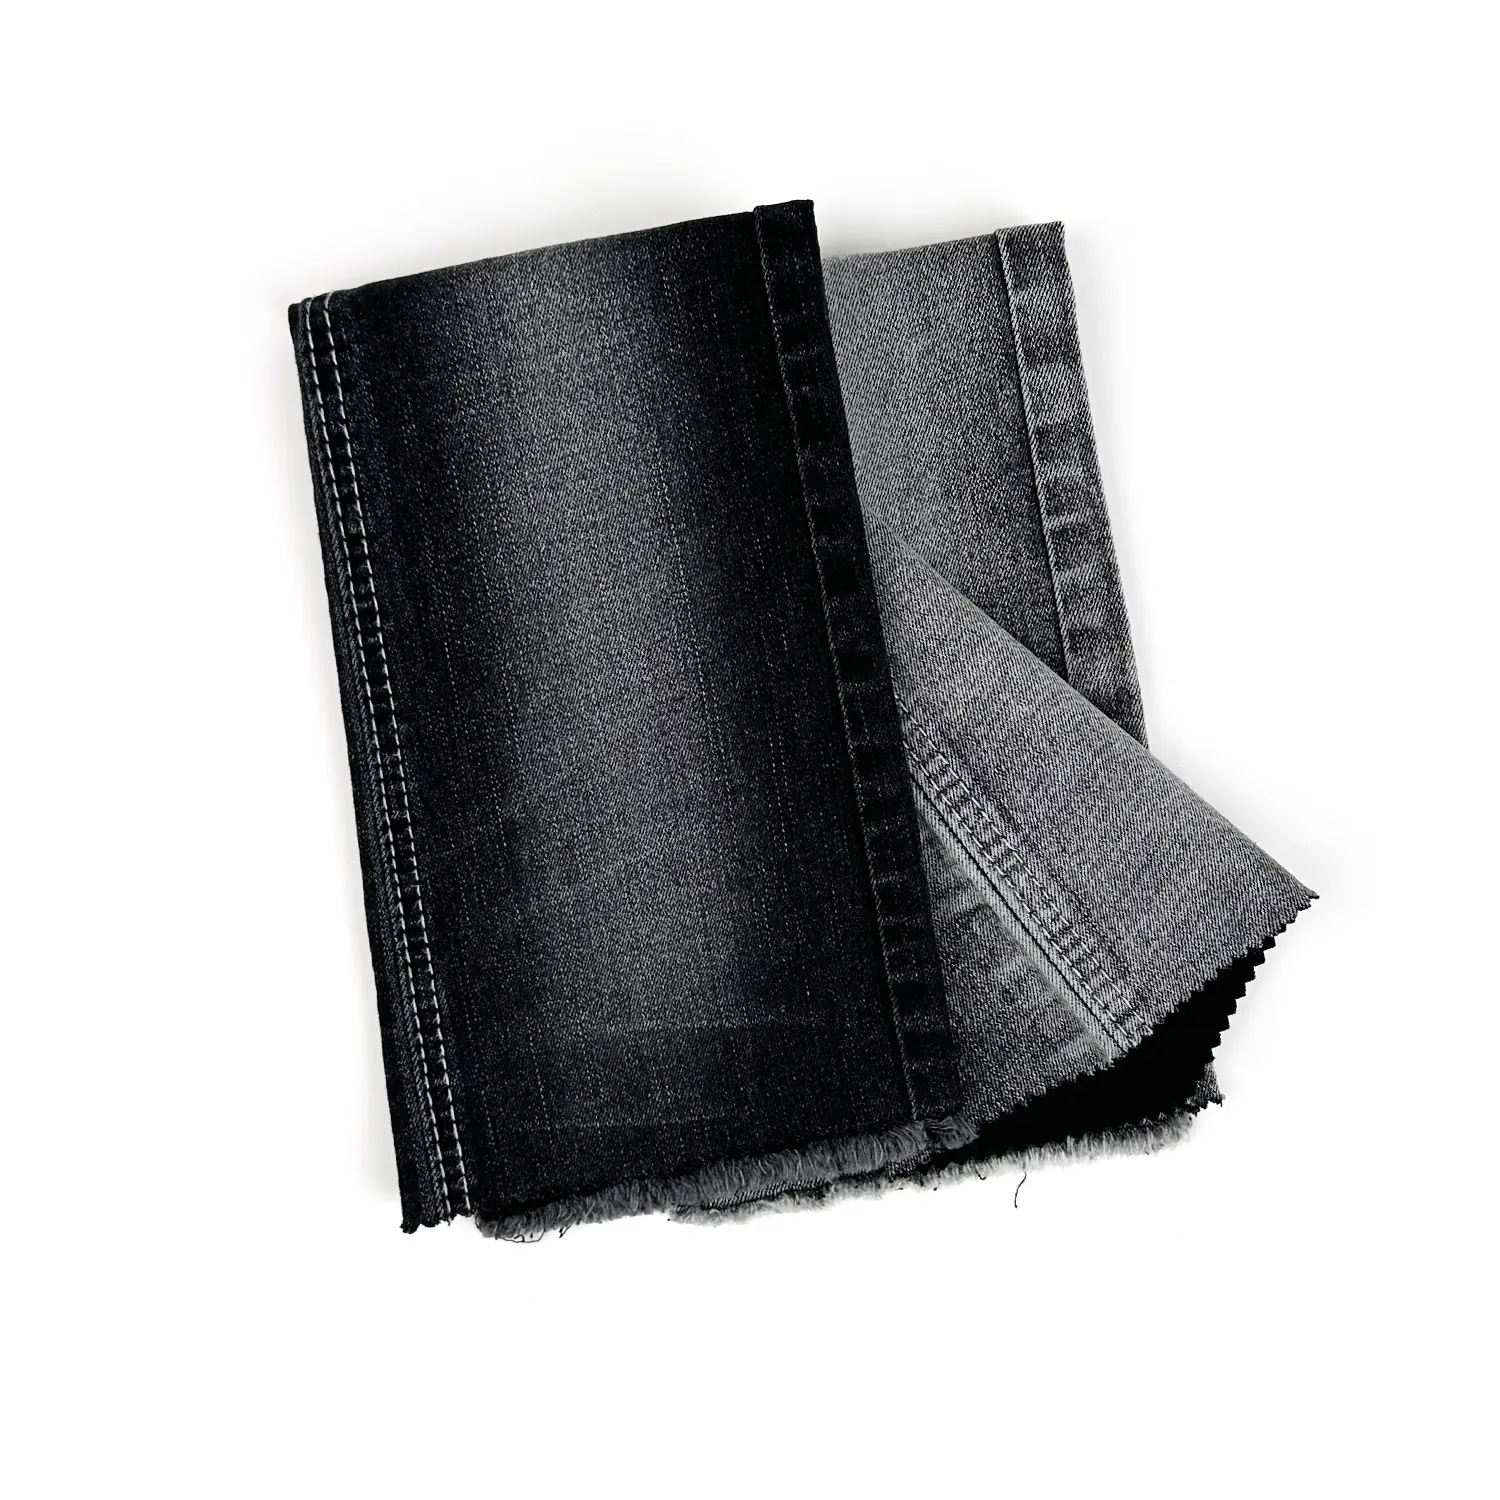 Stock 10s jeans fabric TR denim fabric black face black botton jeans fabric with slub for men denim manufacturers with wholesale